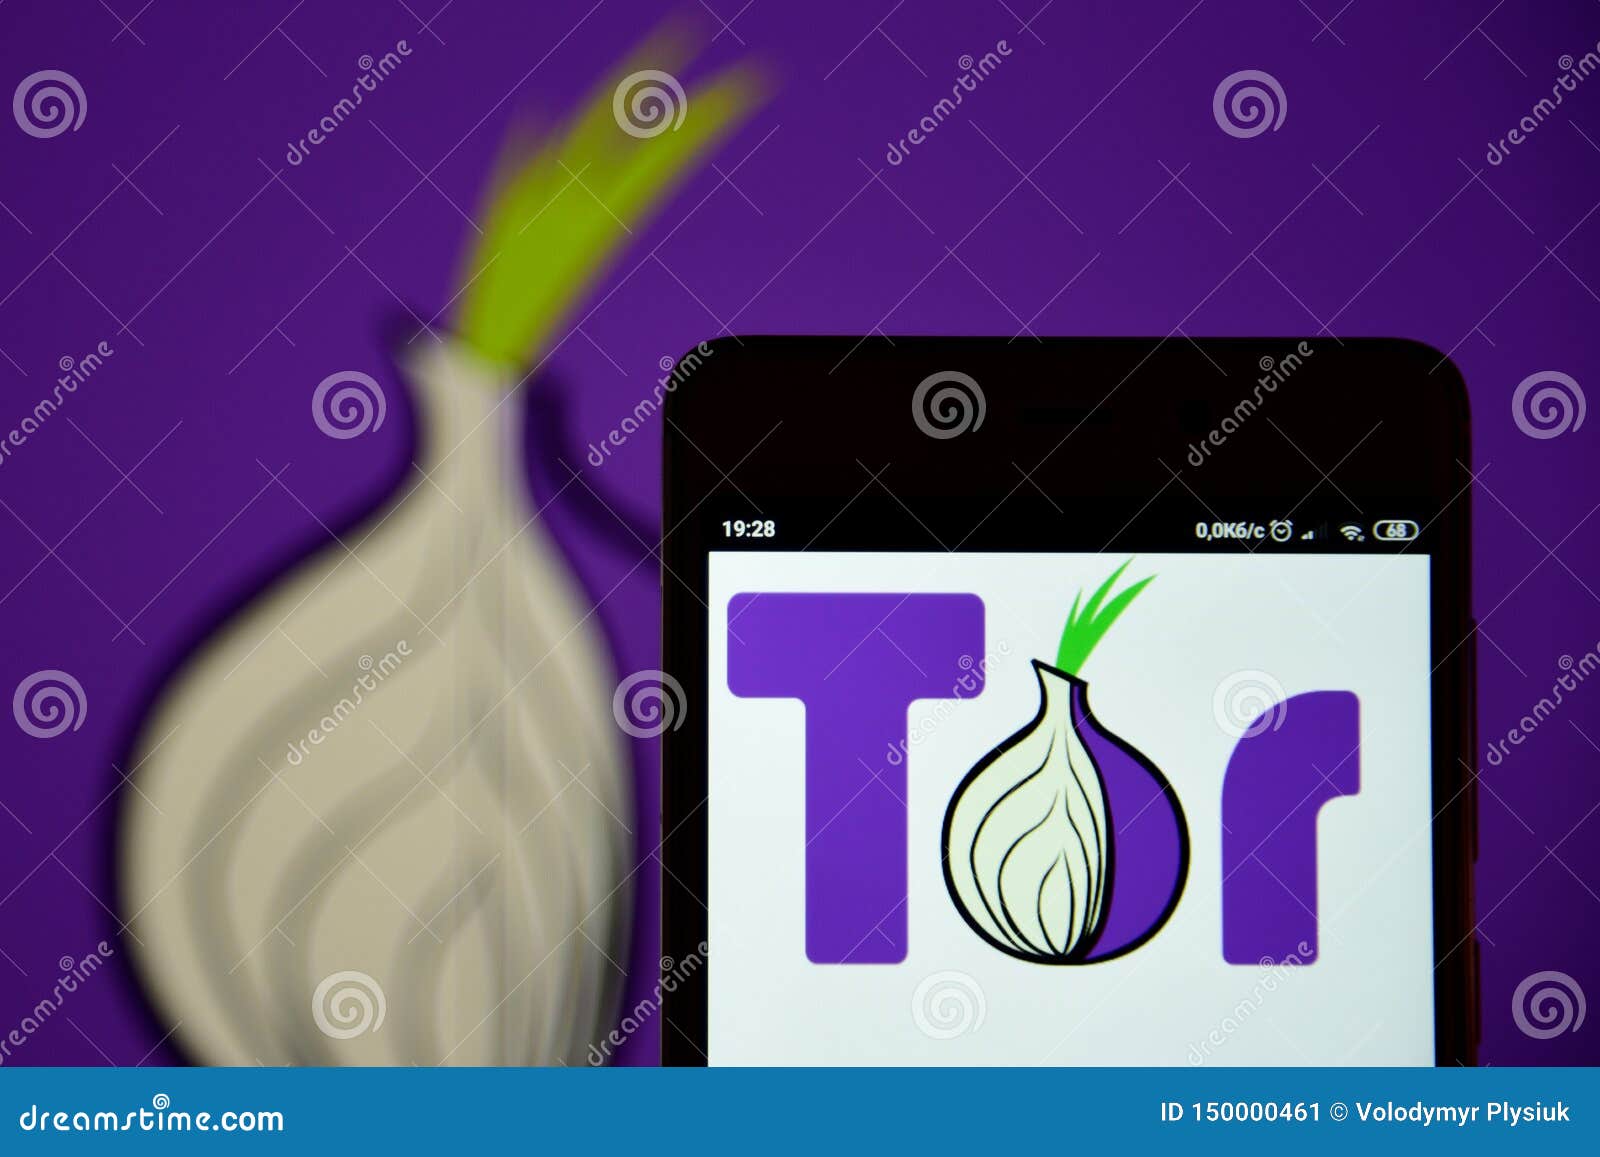 tor browser из украины